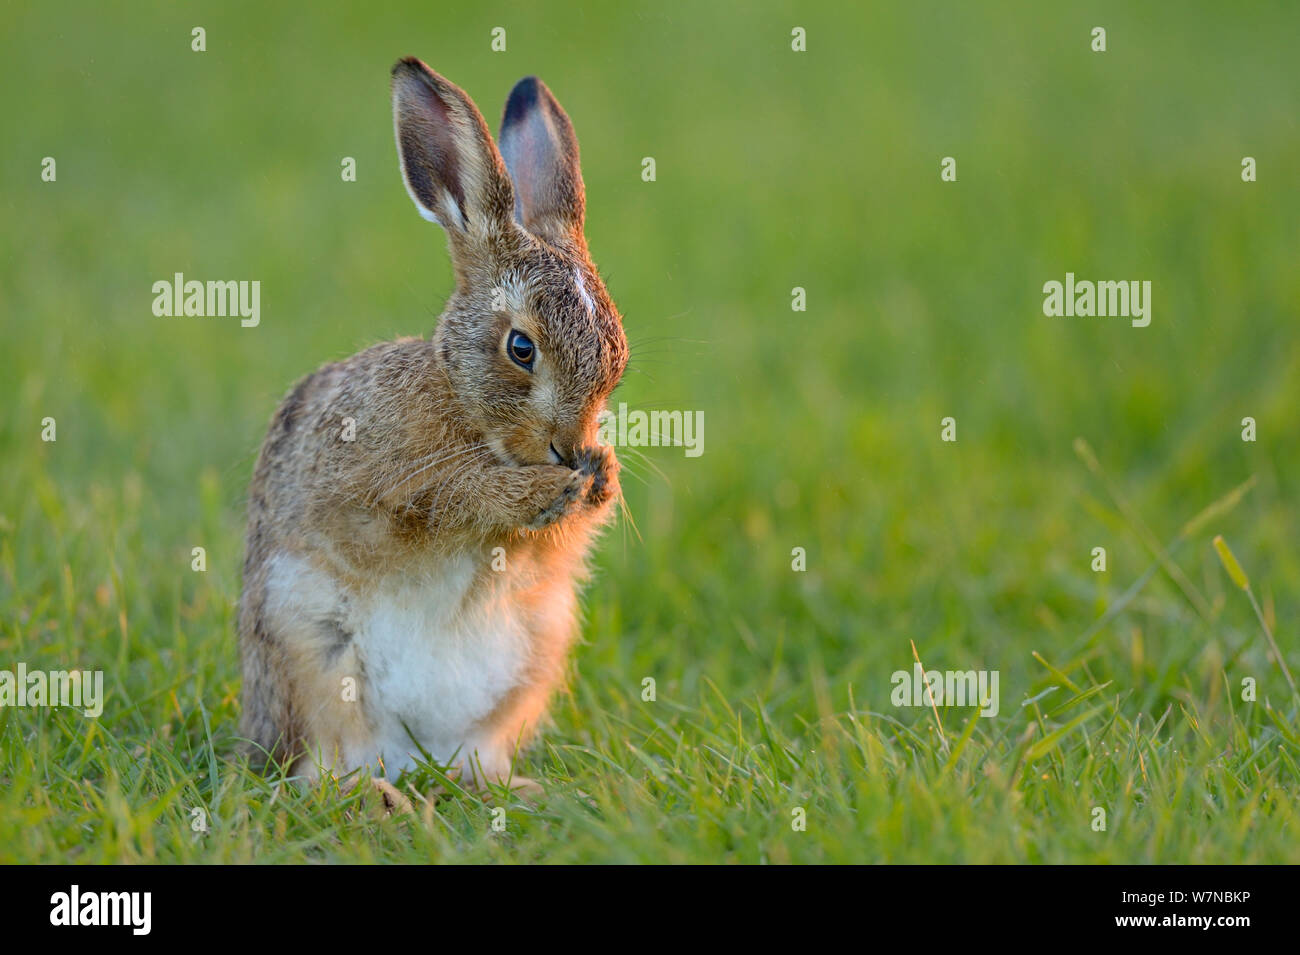 Europäische hare (Lepus europaeus) leveret Reinigung, UK, Juni Stockfoto